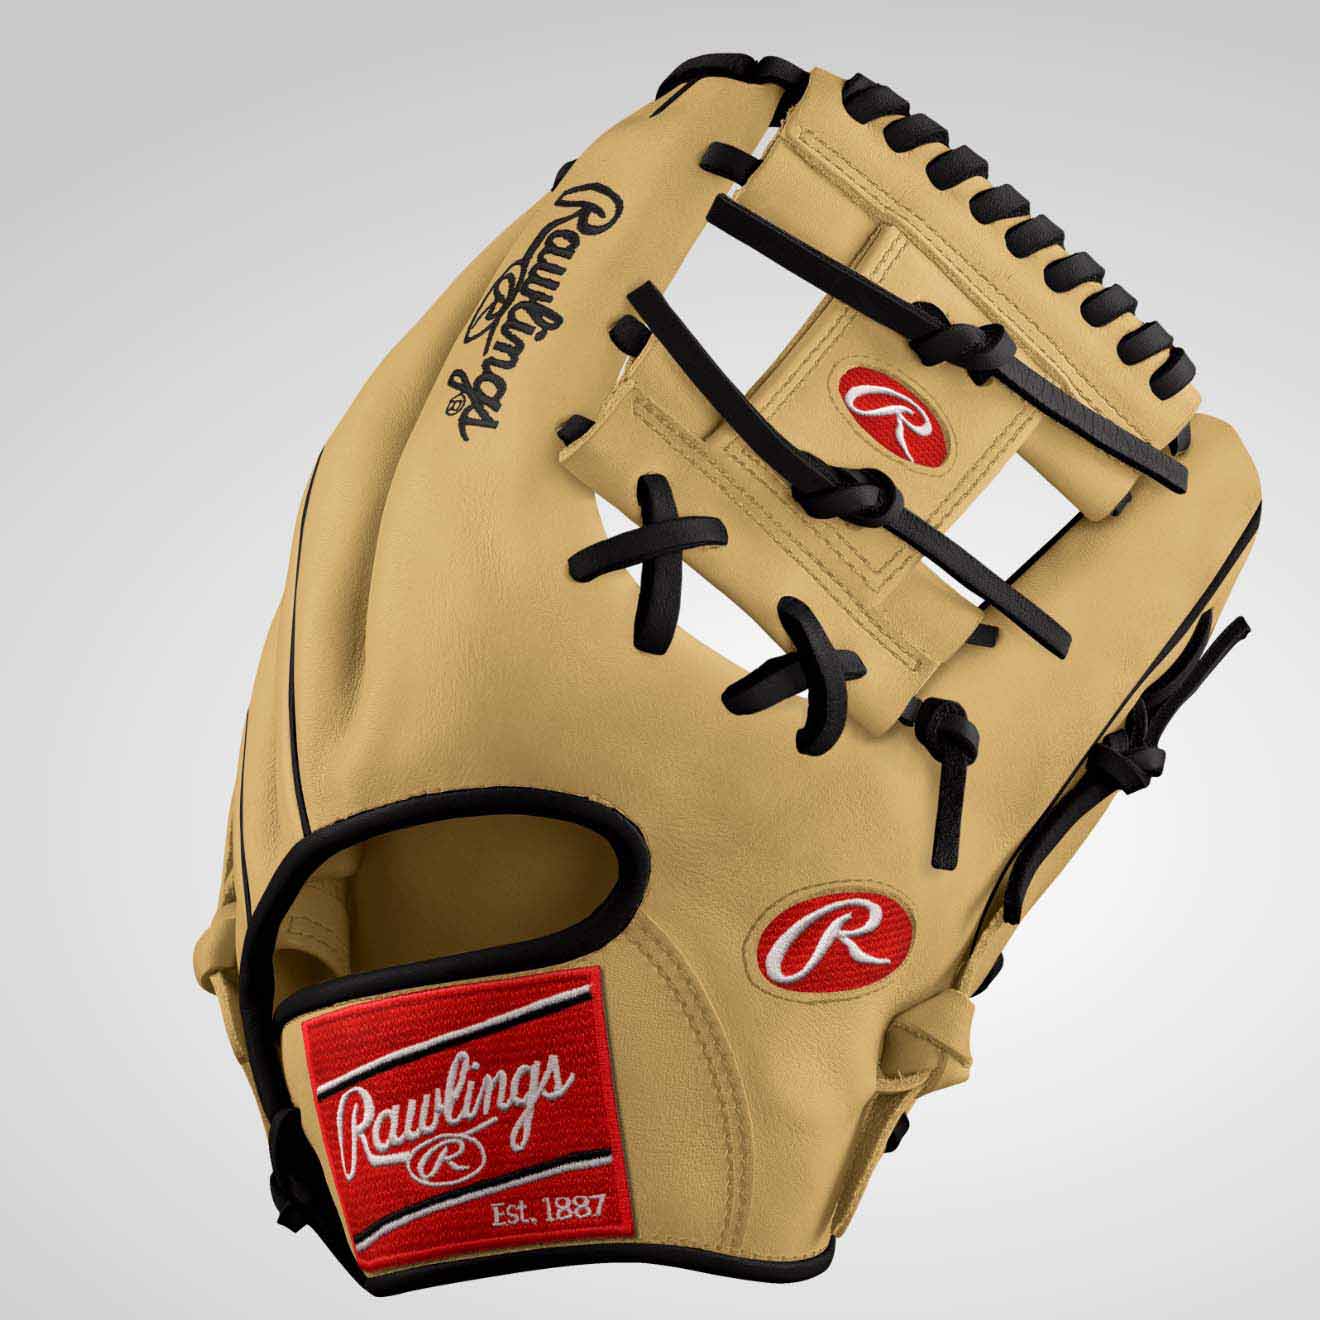 Rawlings custom baseball gloves in cream